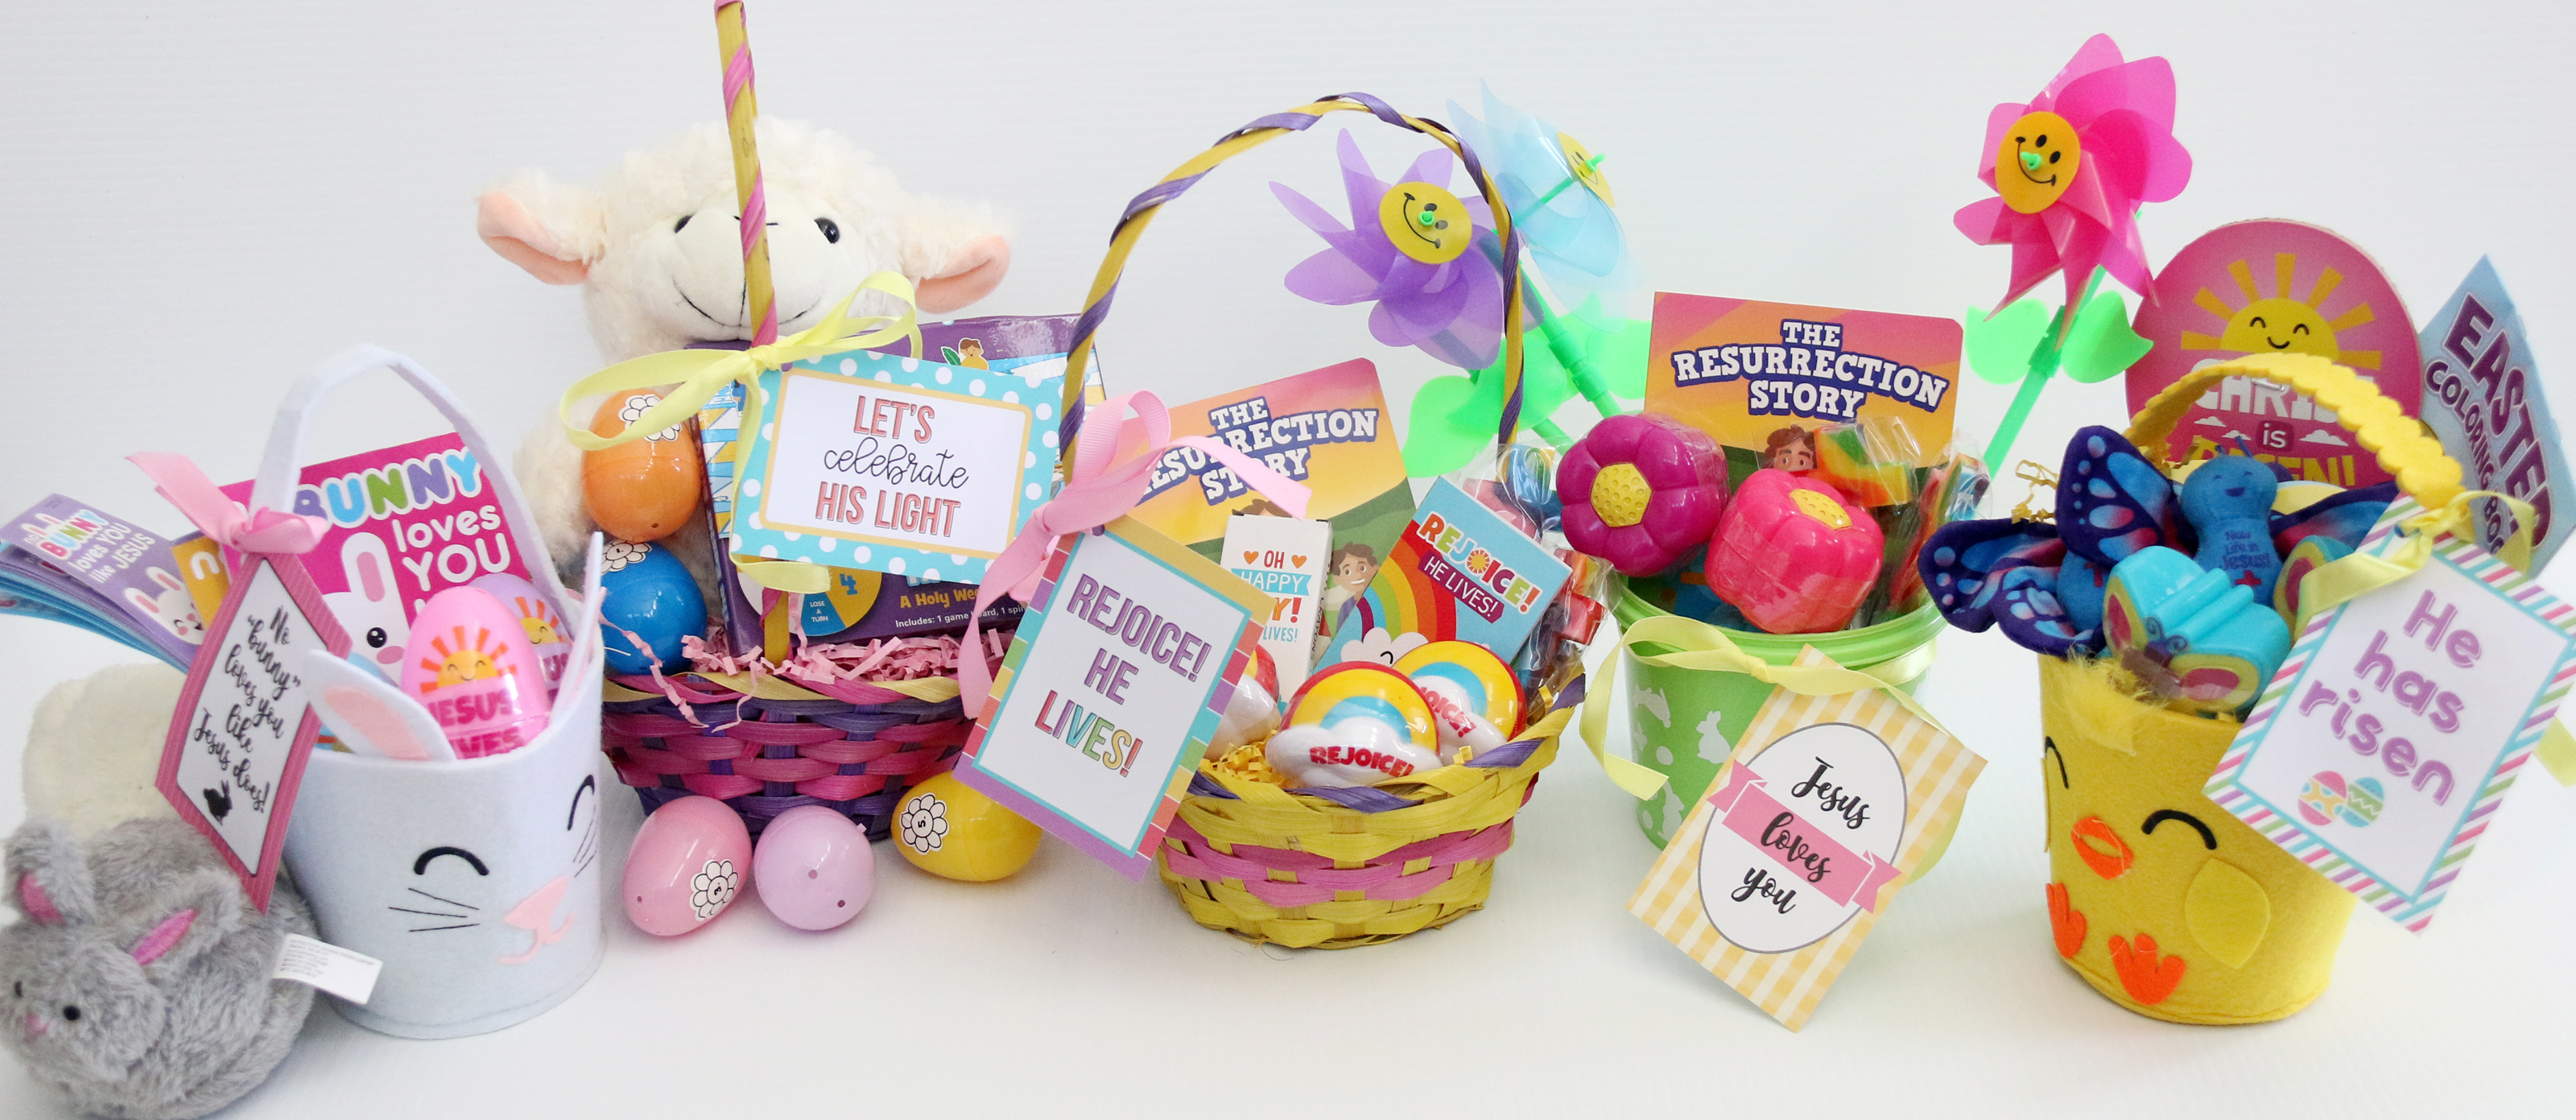 Easter basket ideas: 25 adorable Easter gift ideas for kids